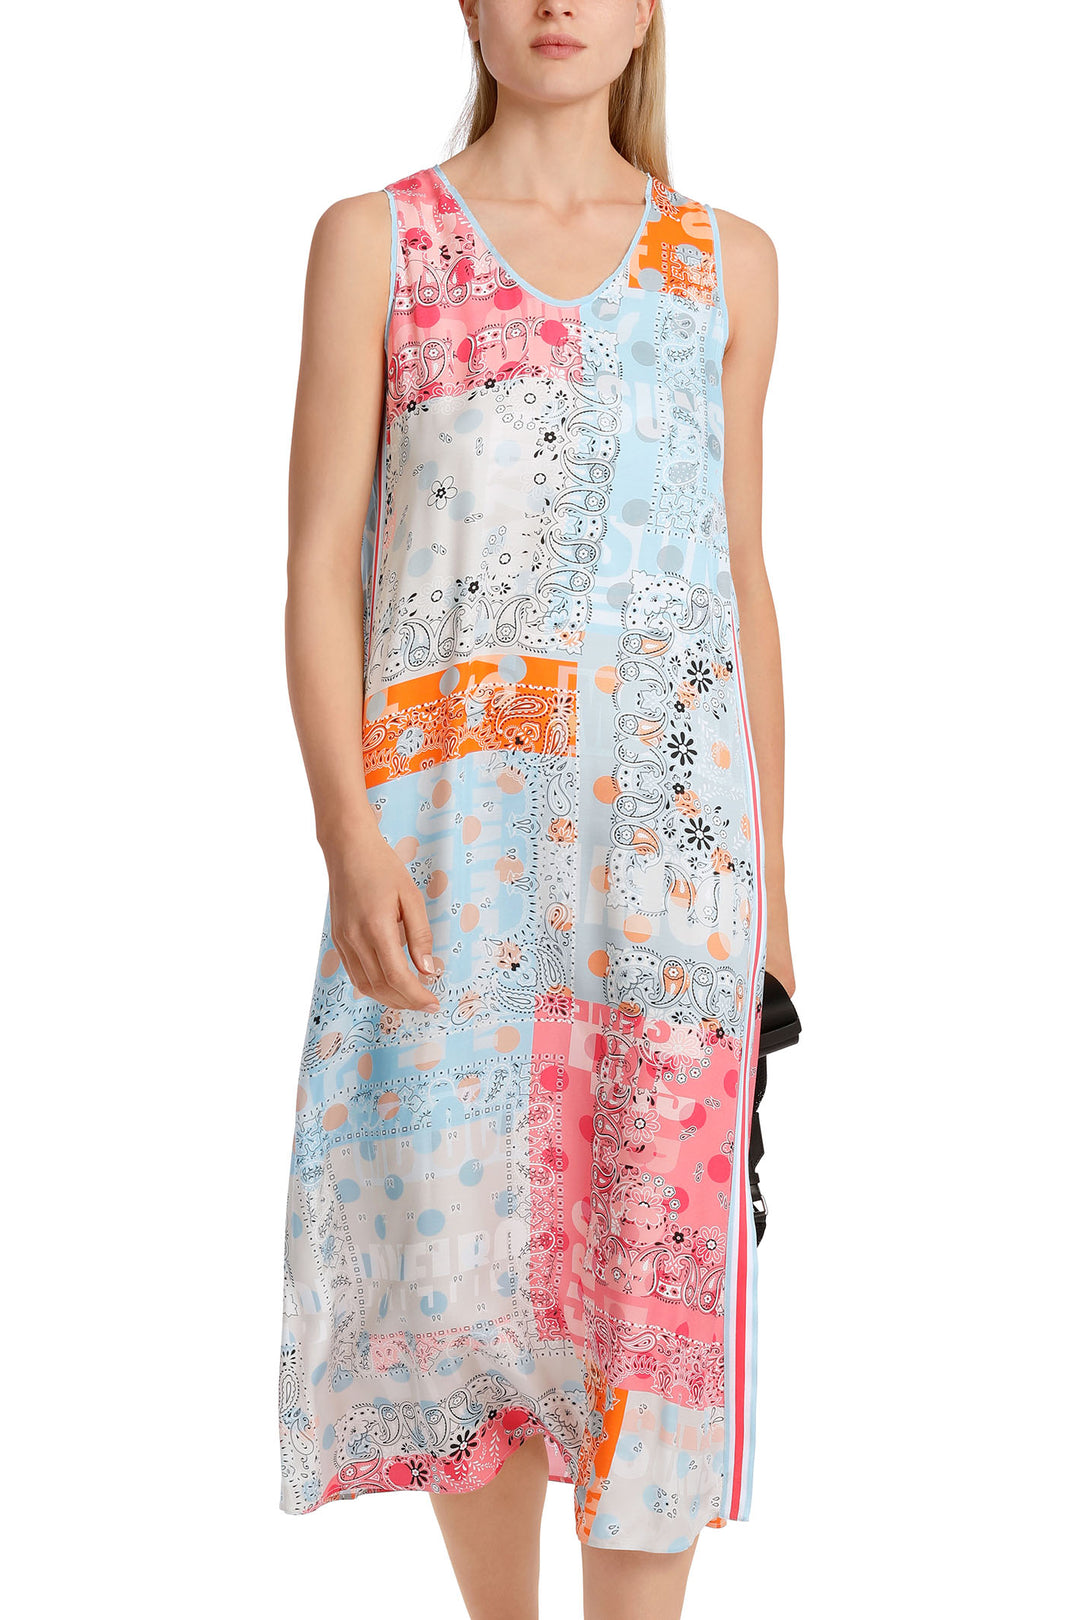 Marc Cain WS 21.38 W07 238 Blue Sleeveless Colourful Summer Dress - Olivia Grace Fashion